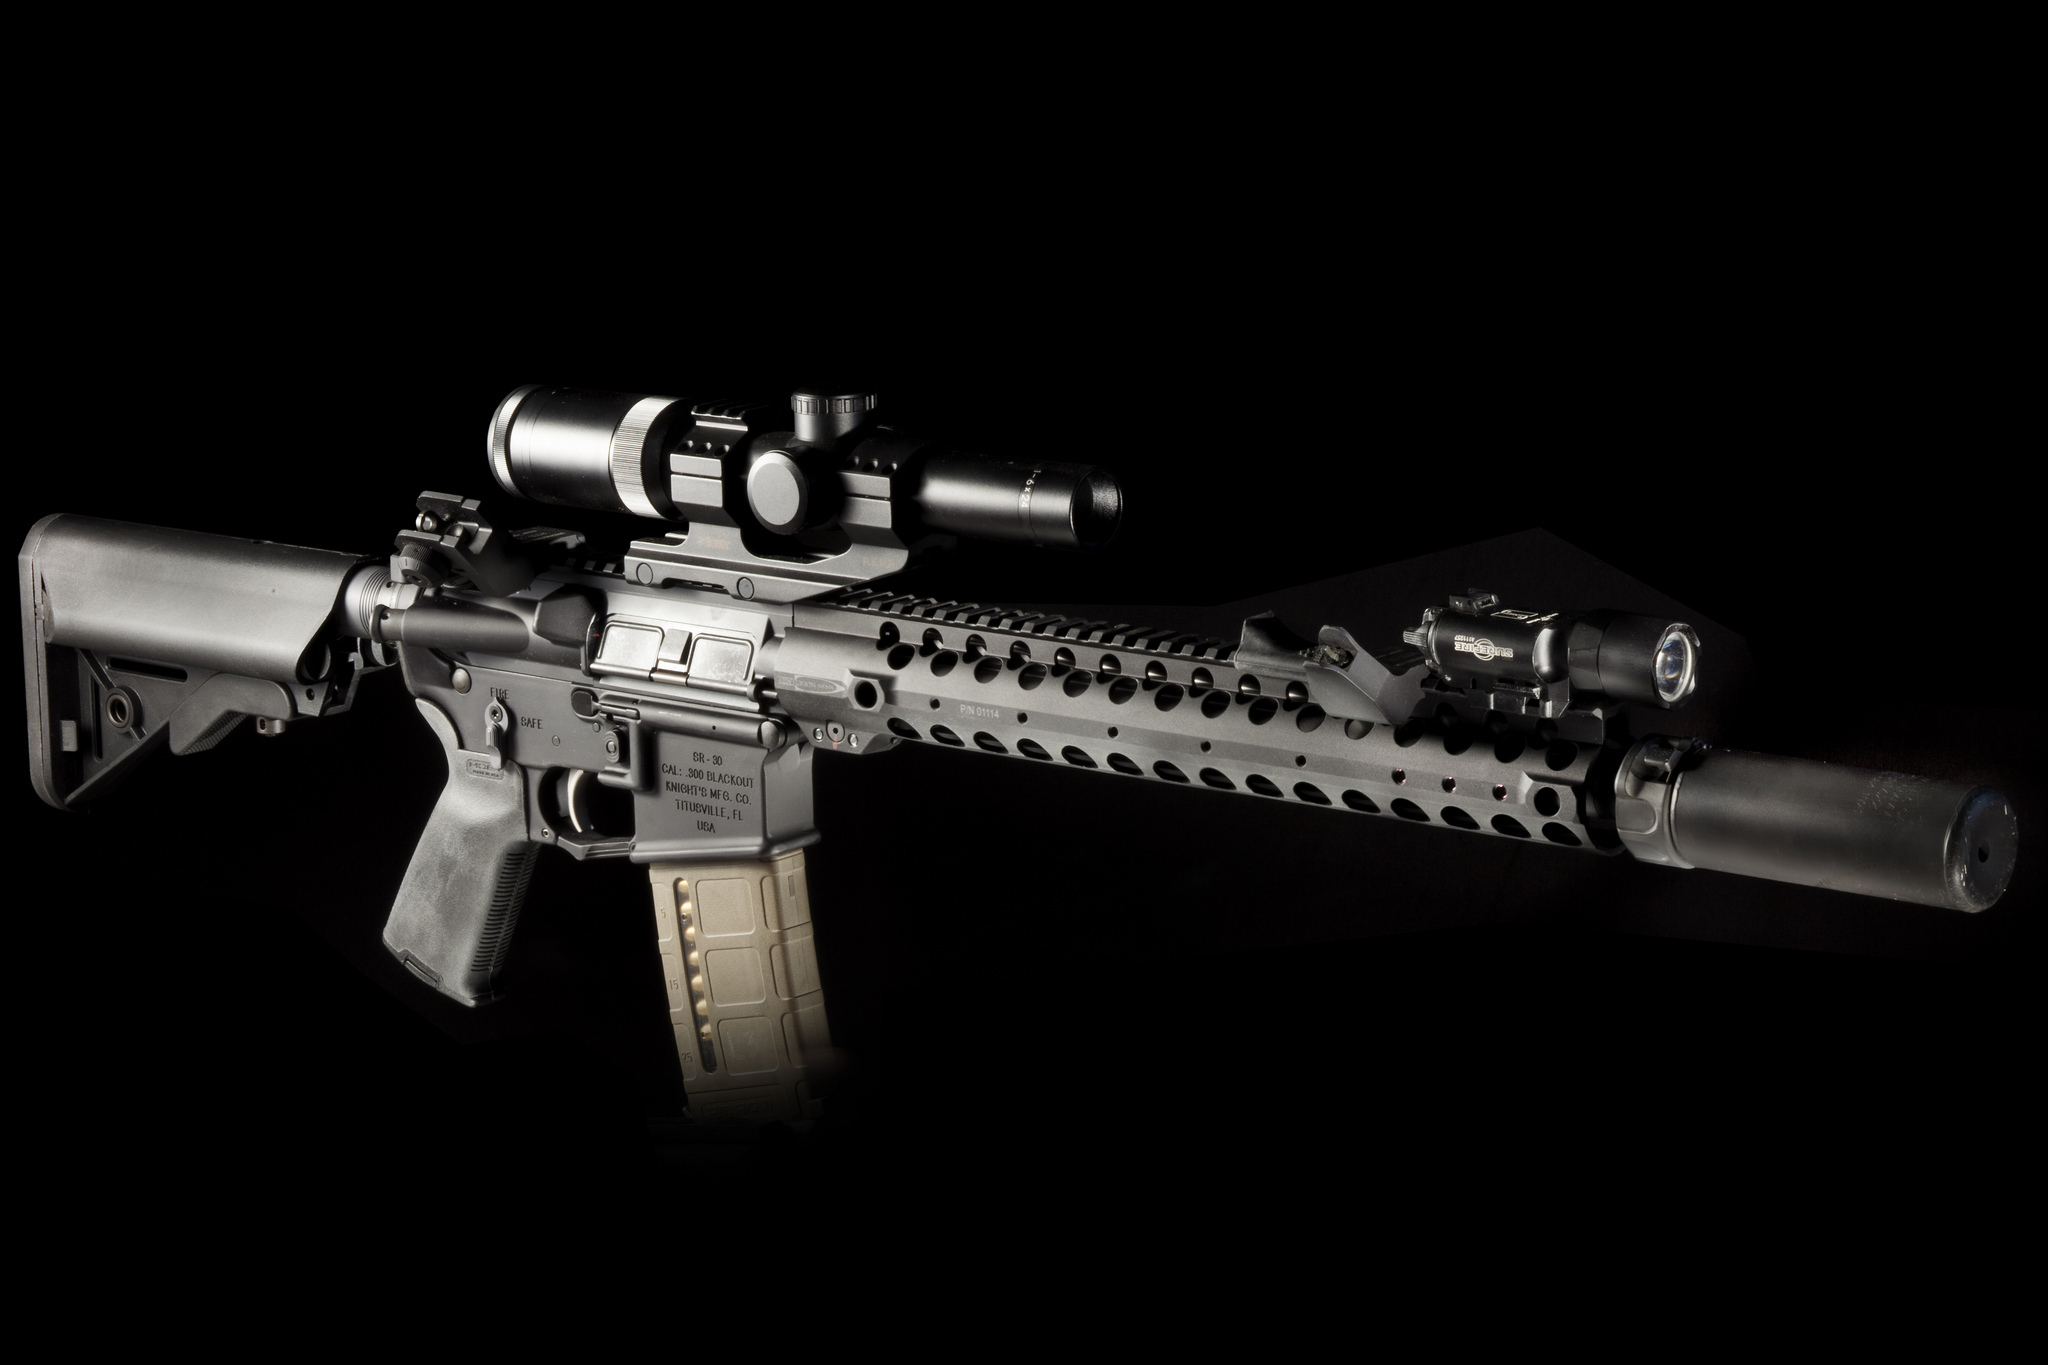 M4 Carbine Assault Rifle Wallpaper Image To Inspire Picturejedi